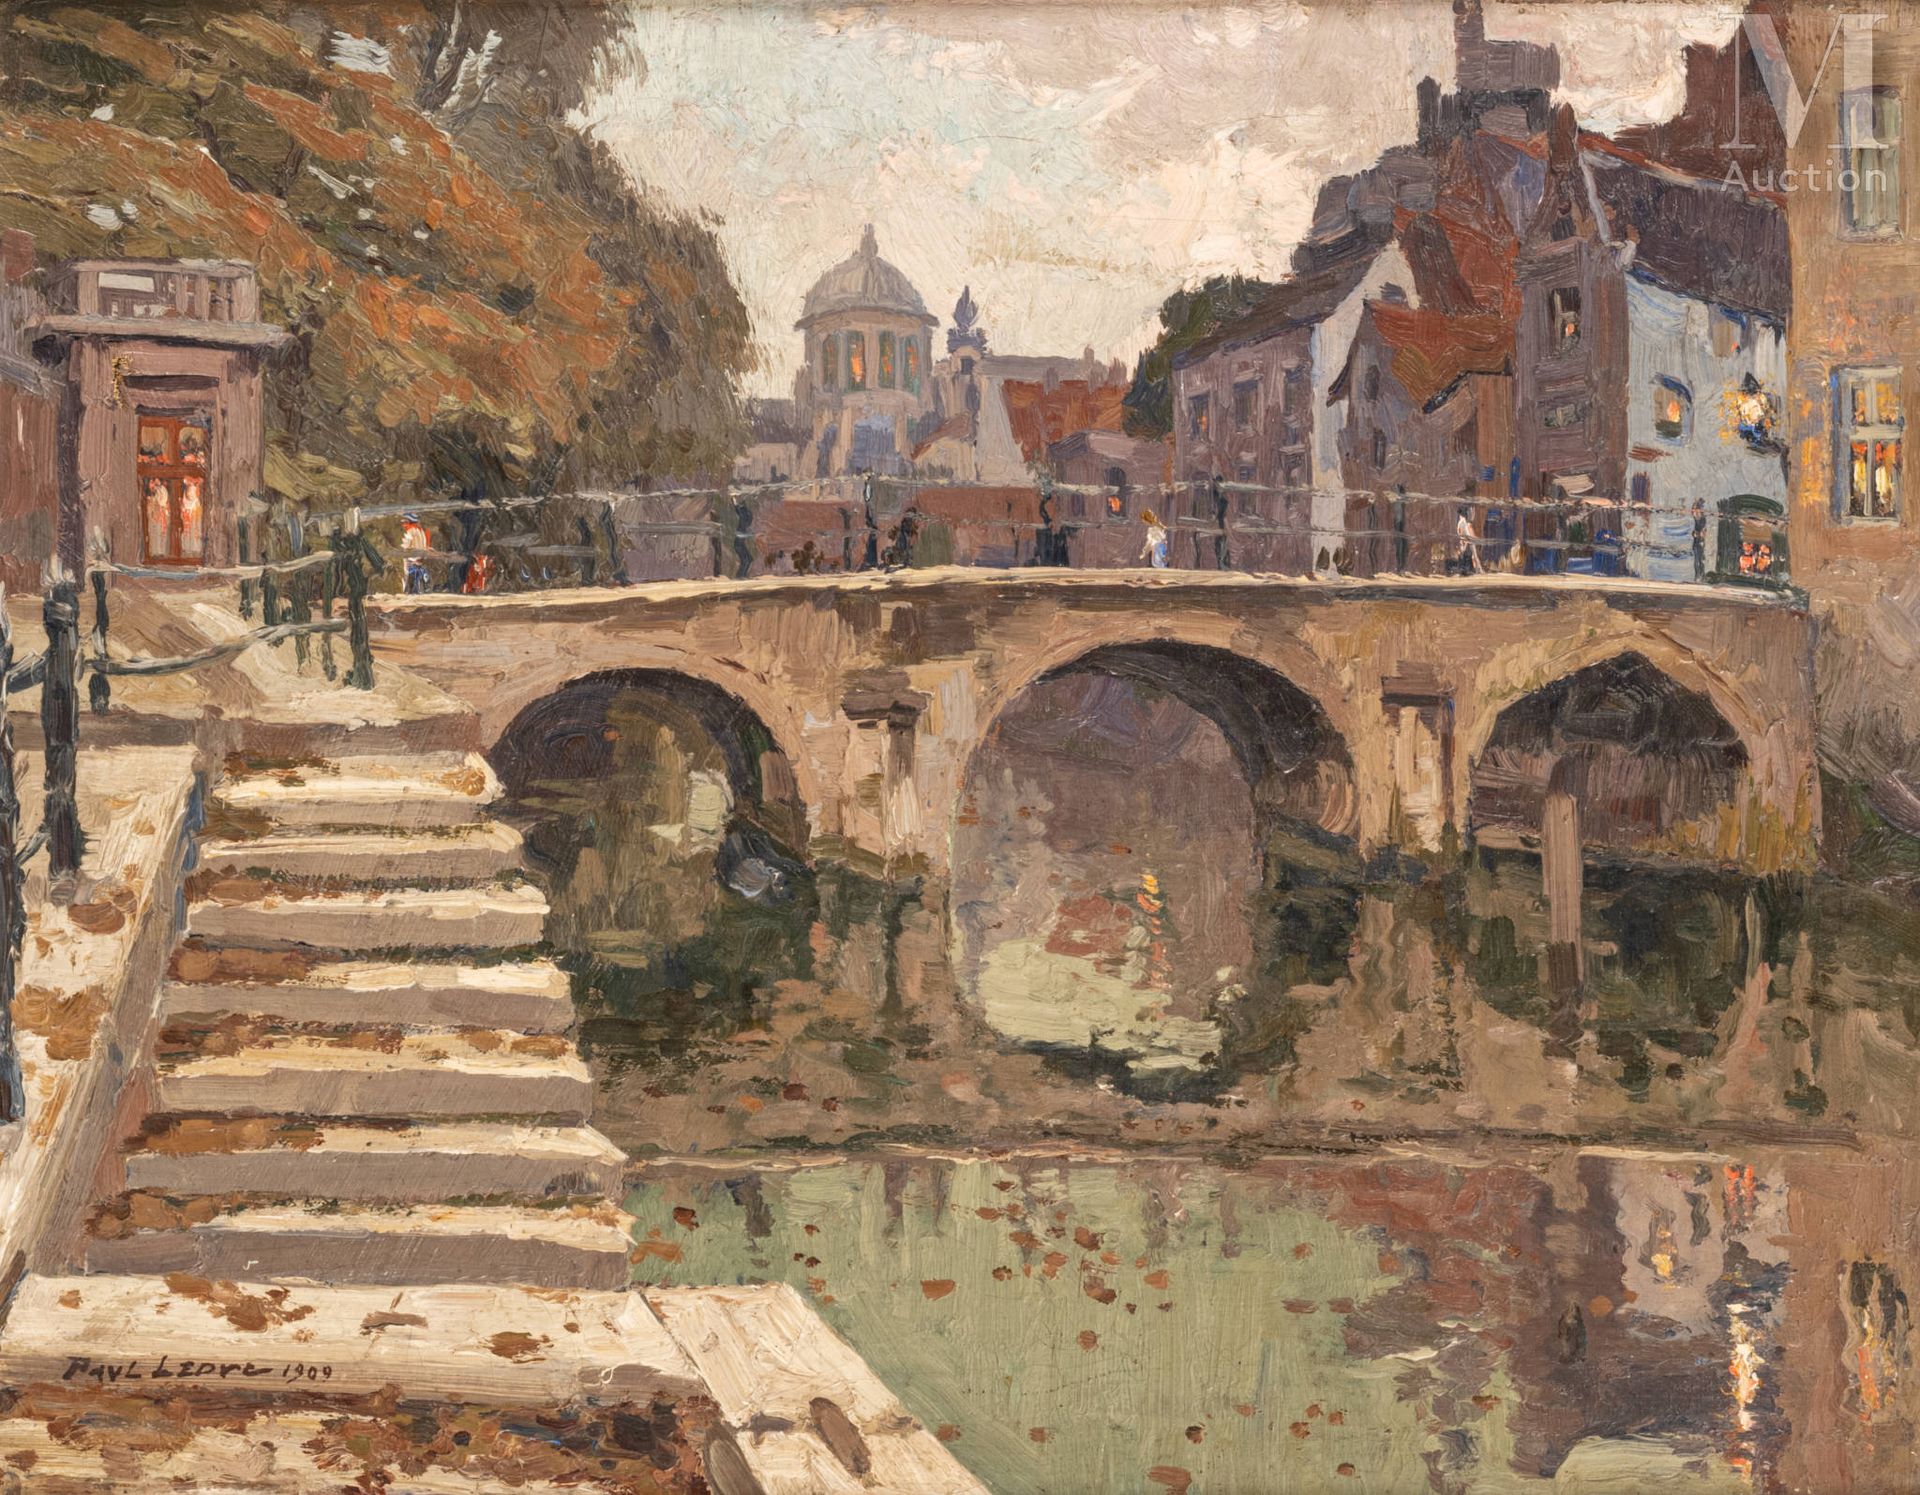 Paul Leduc (1876-1943) 根特市的景色



布面油画

51 x 60.5厘米

左下角有签名和日期：Paul Leduc 1909